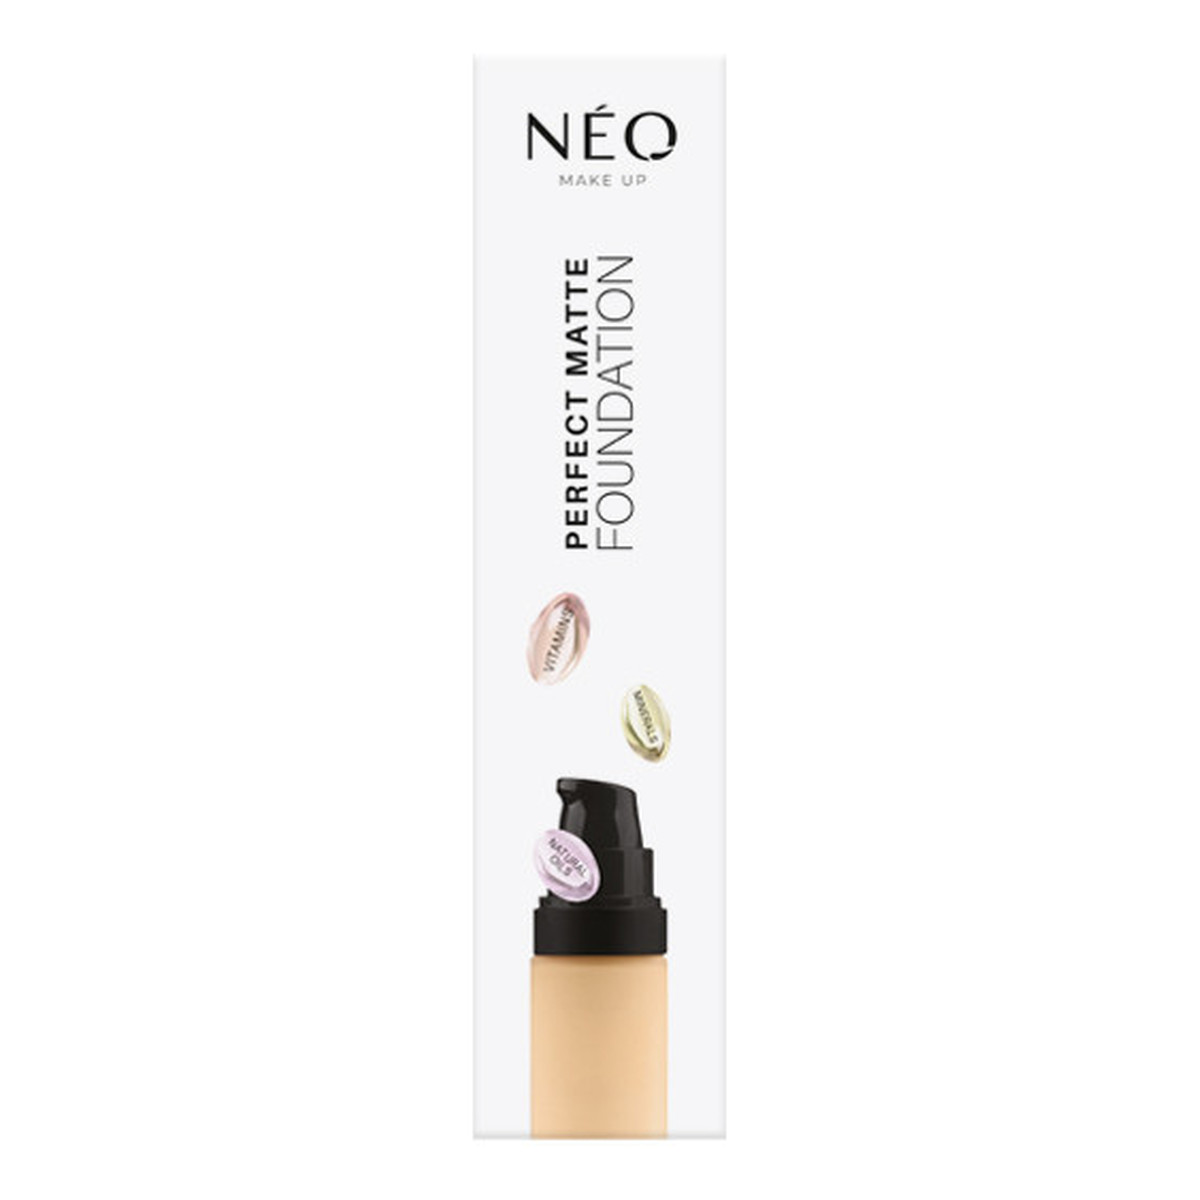 Neo Make Up Perfect Matte Foundation podkład matujący 30ml